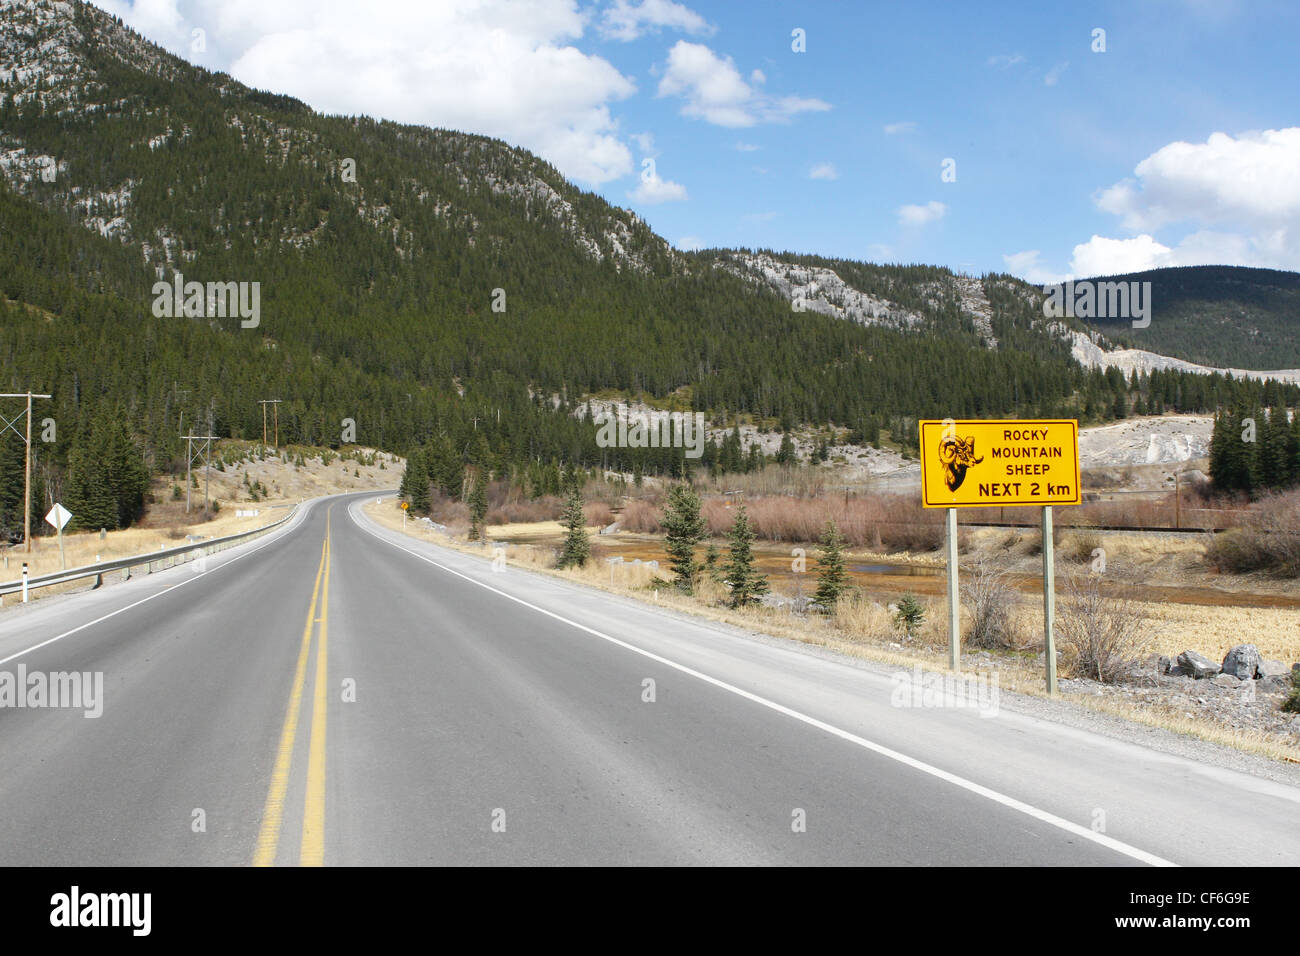 Paved highway.  Rocky Mountain sheep ahead. Stock Photo